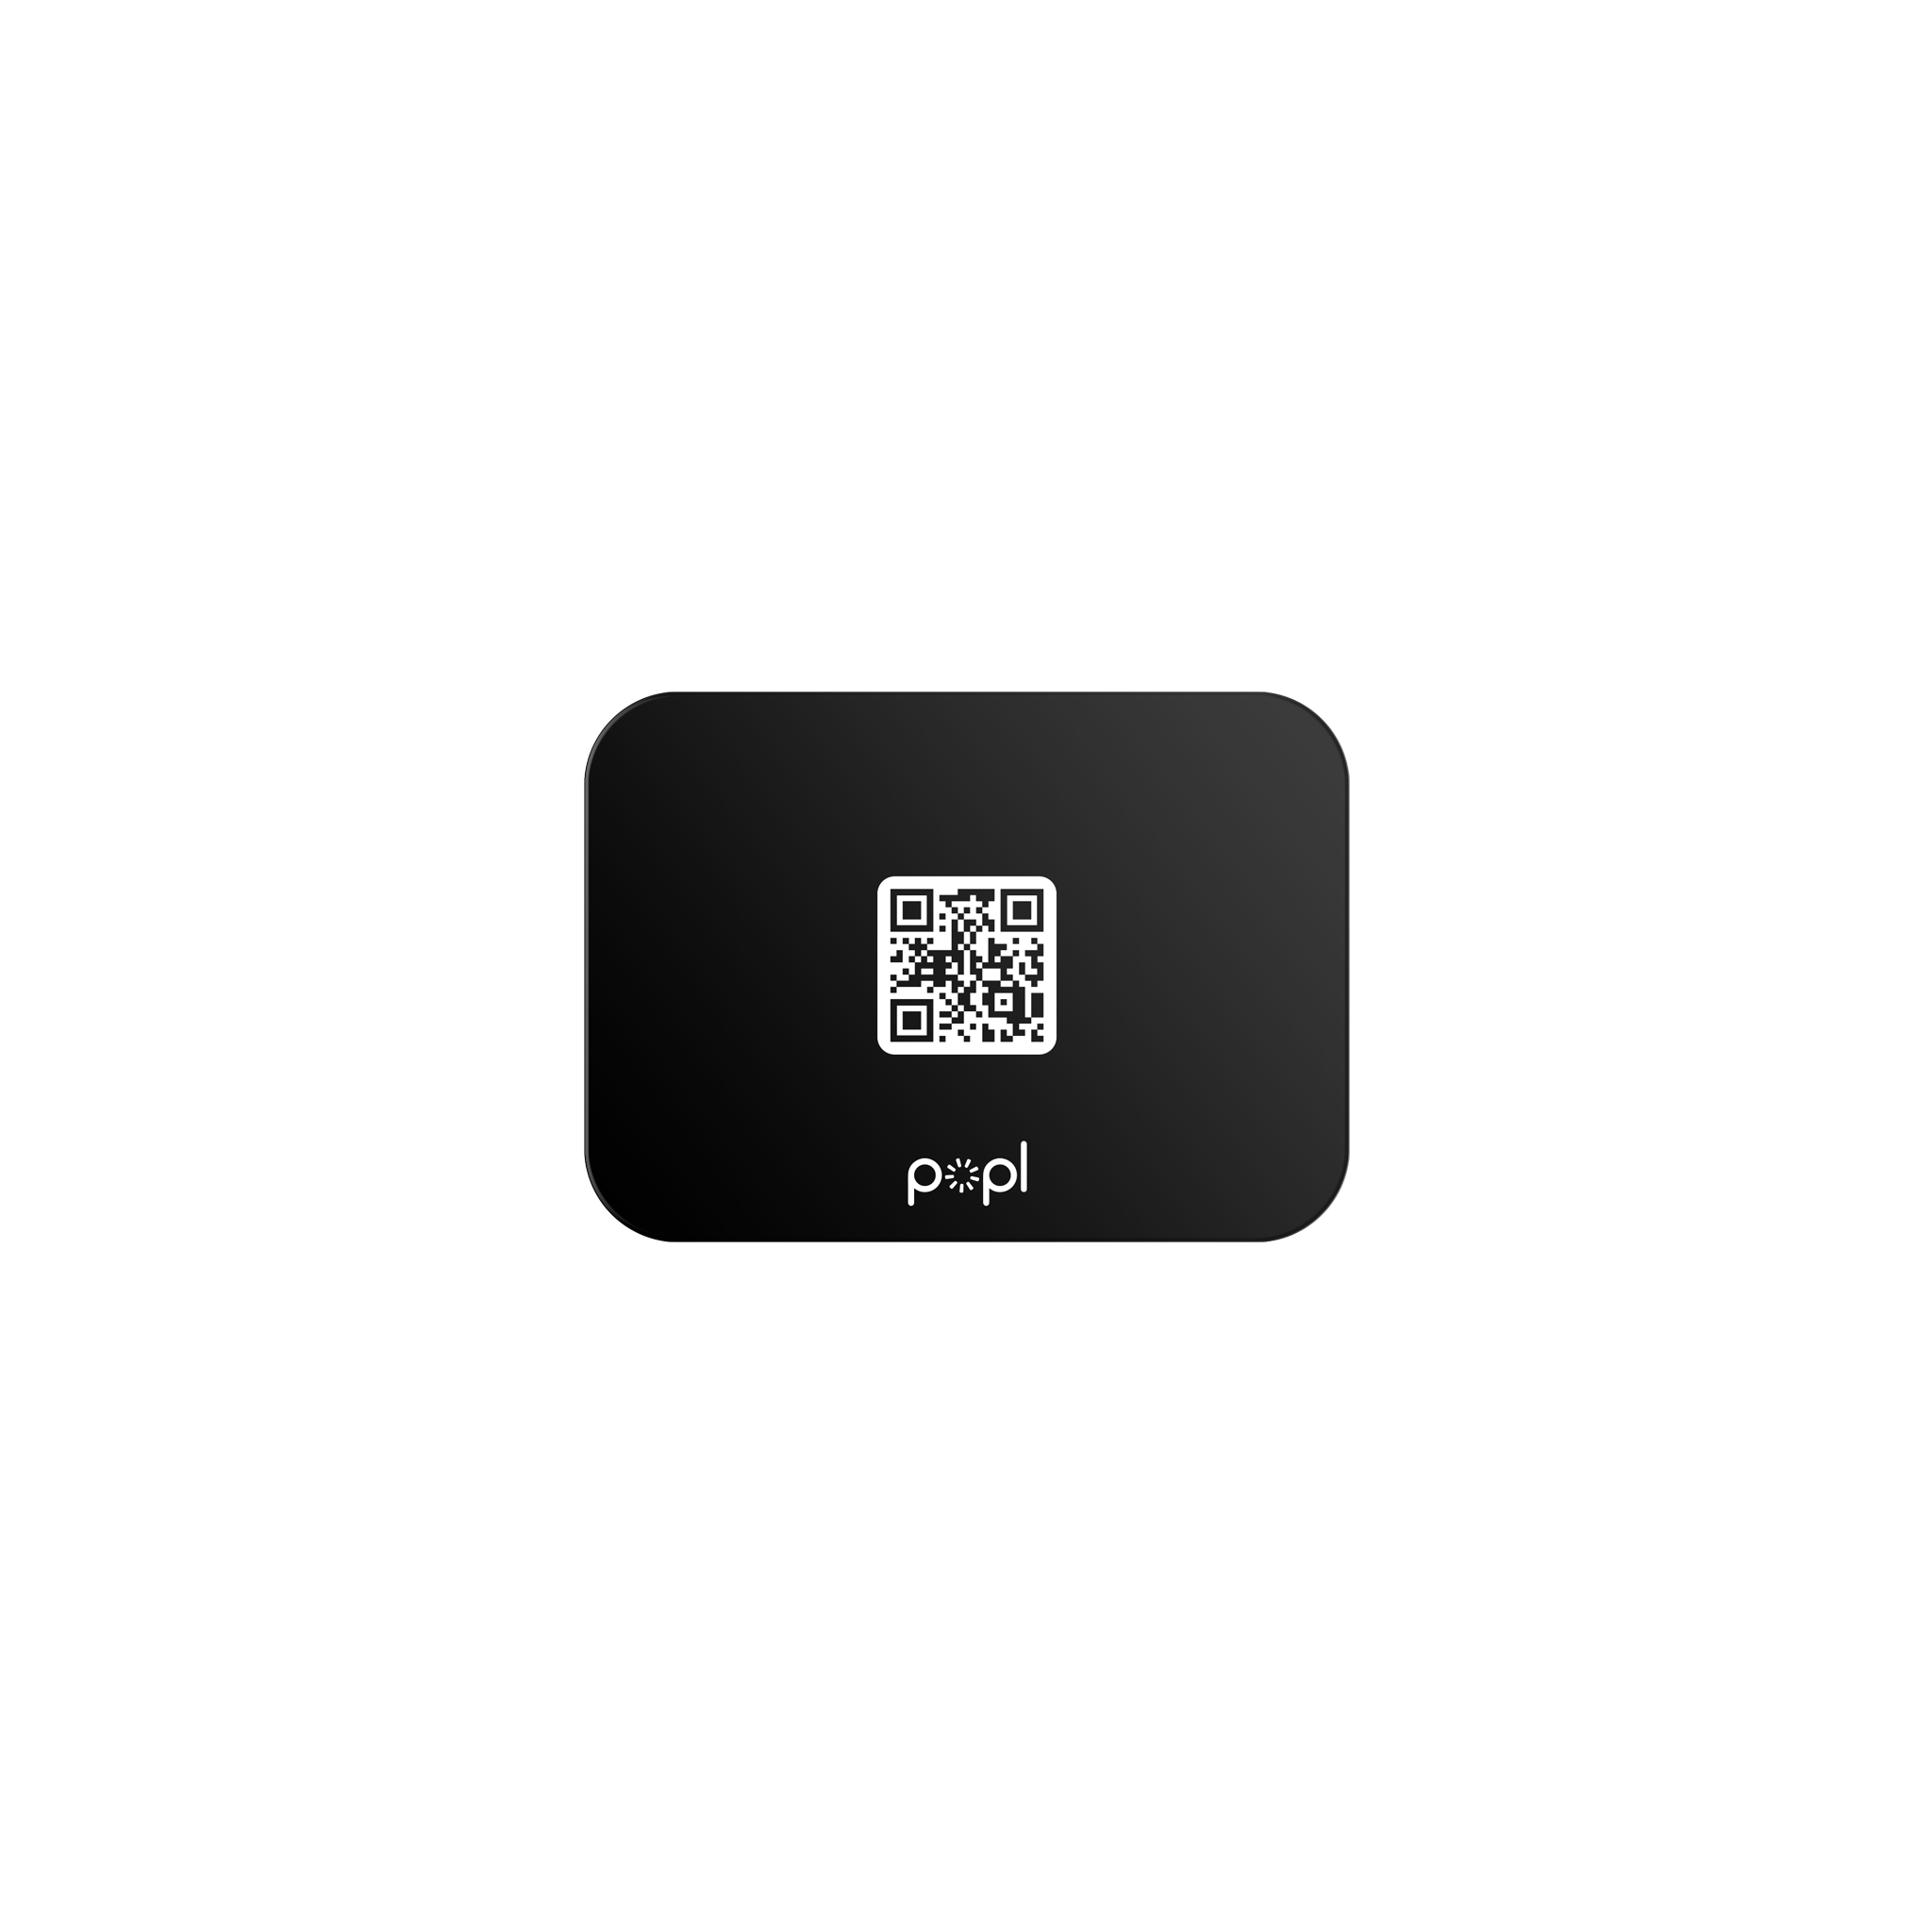 Popl PhoneCard™